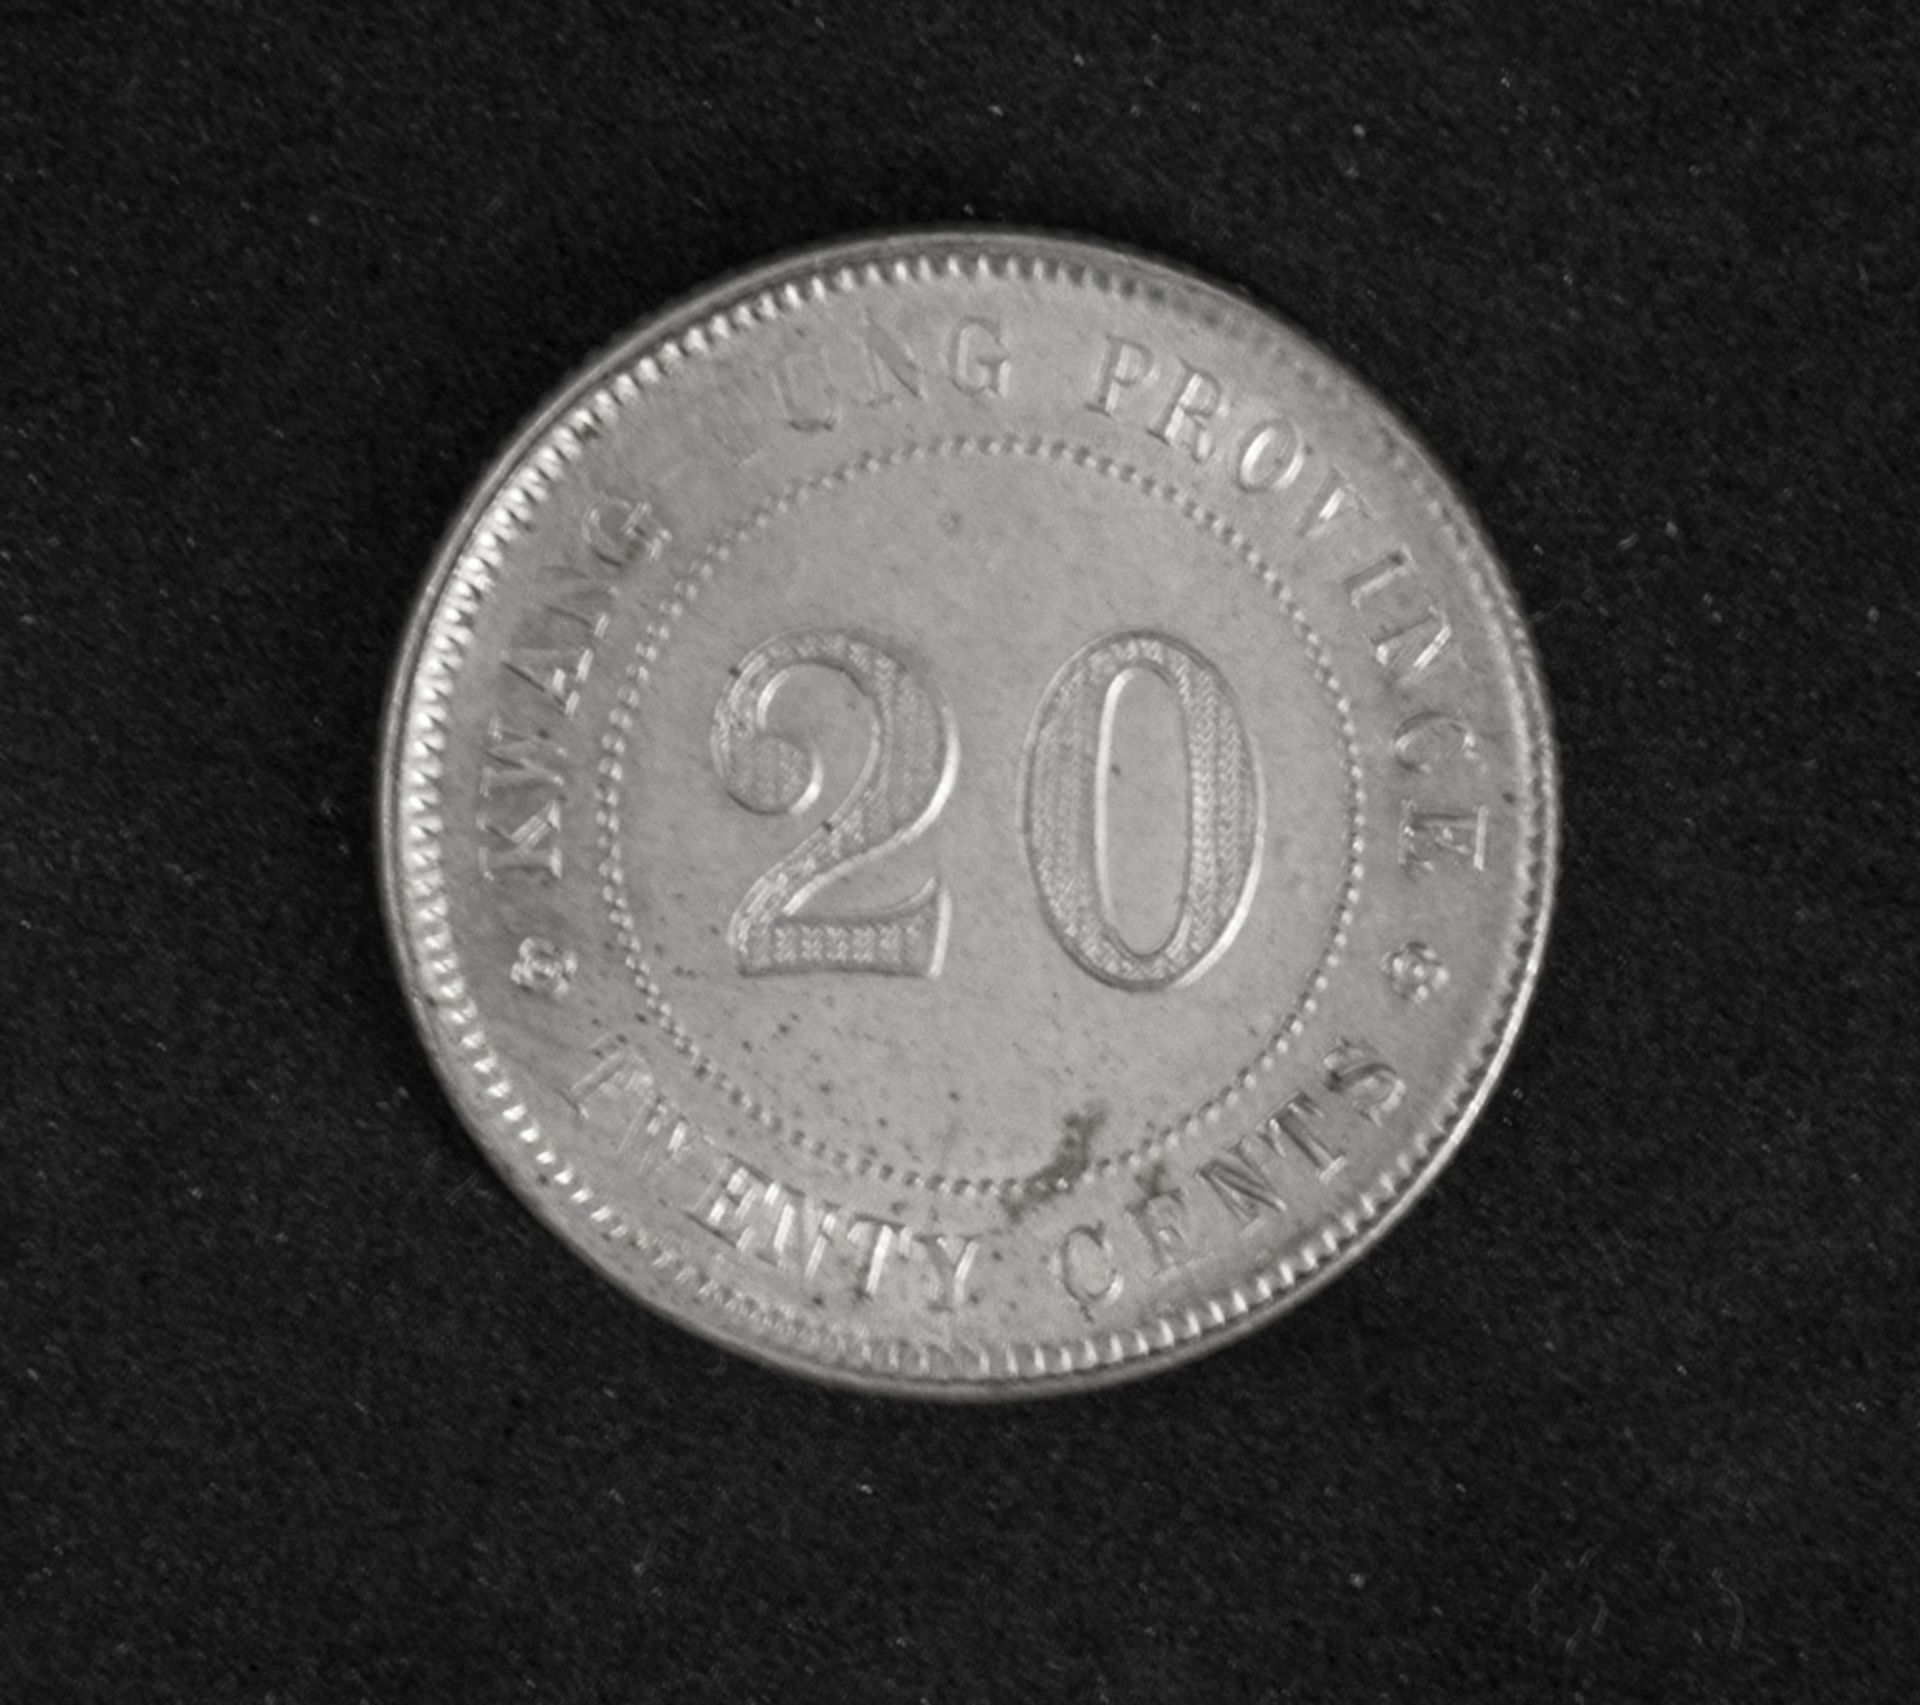 China Kwang Tung 1921, 20 Cents - Silbermünze. Erhaltung: ss.